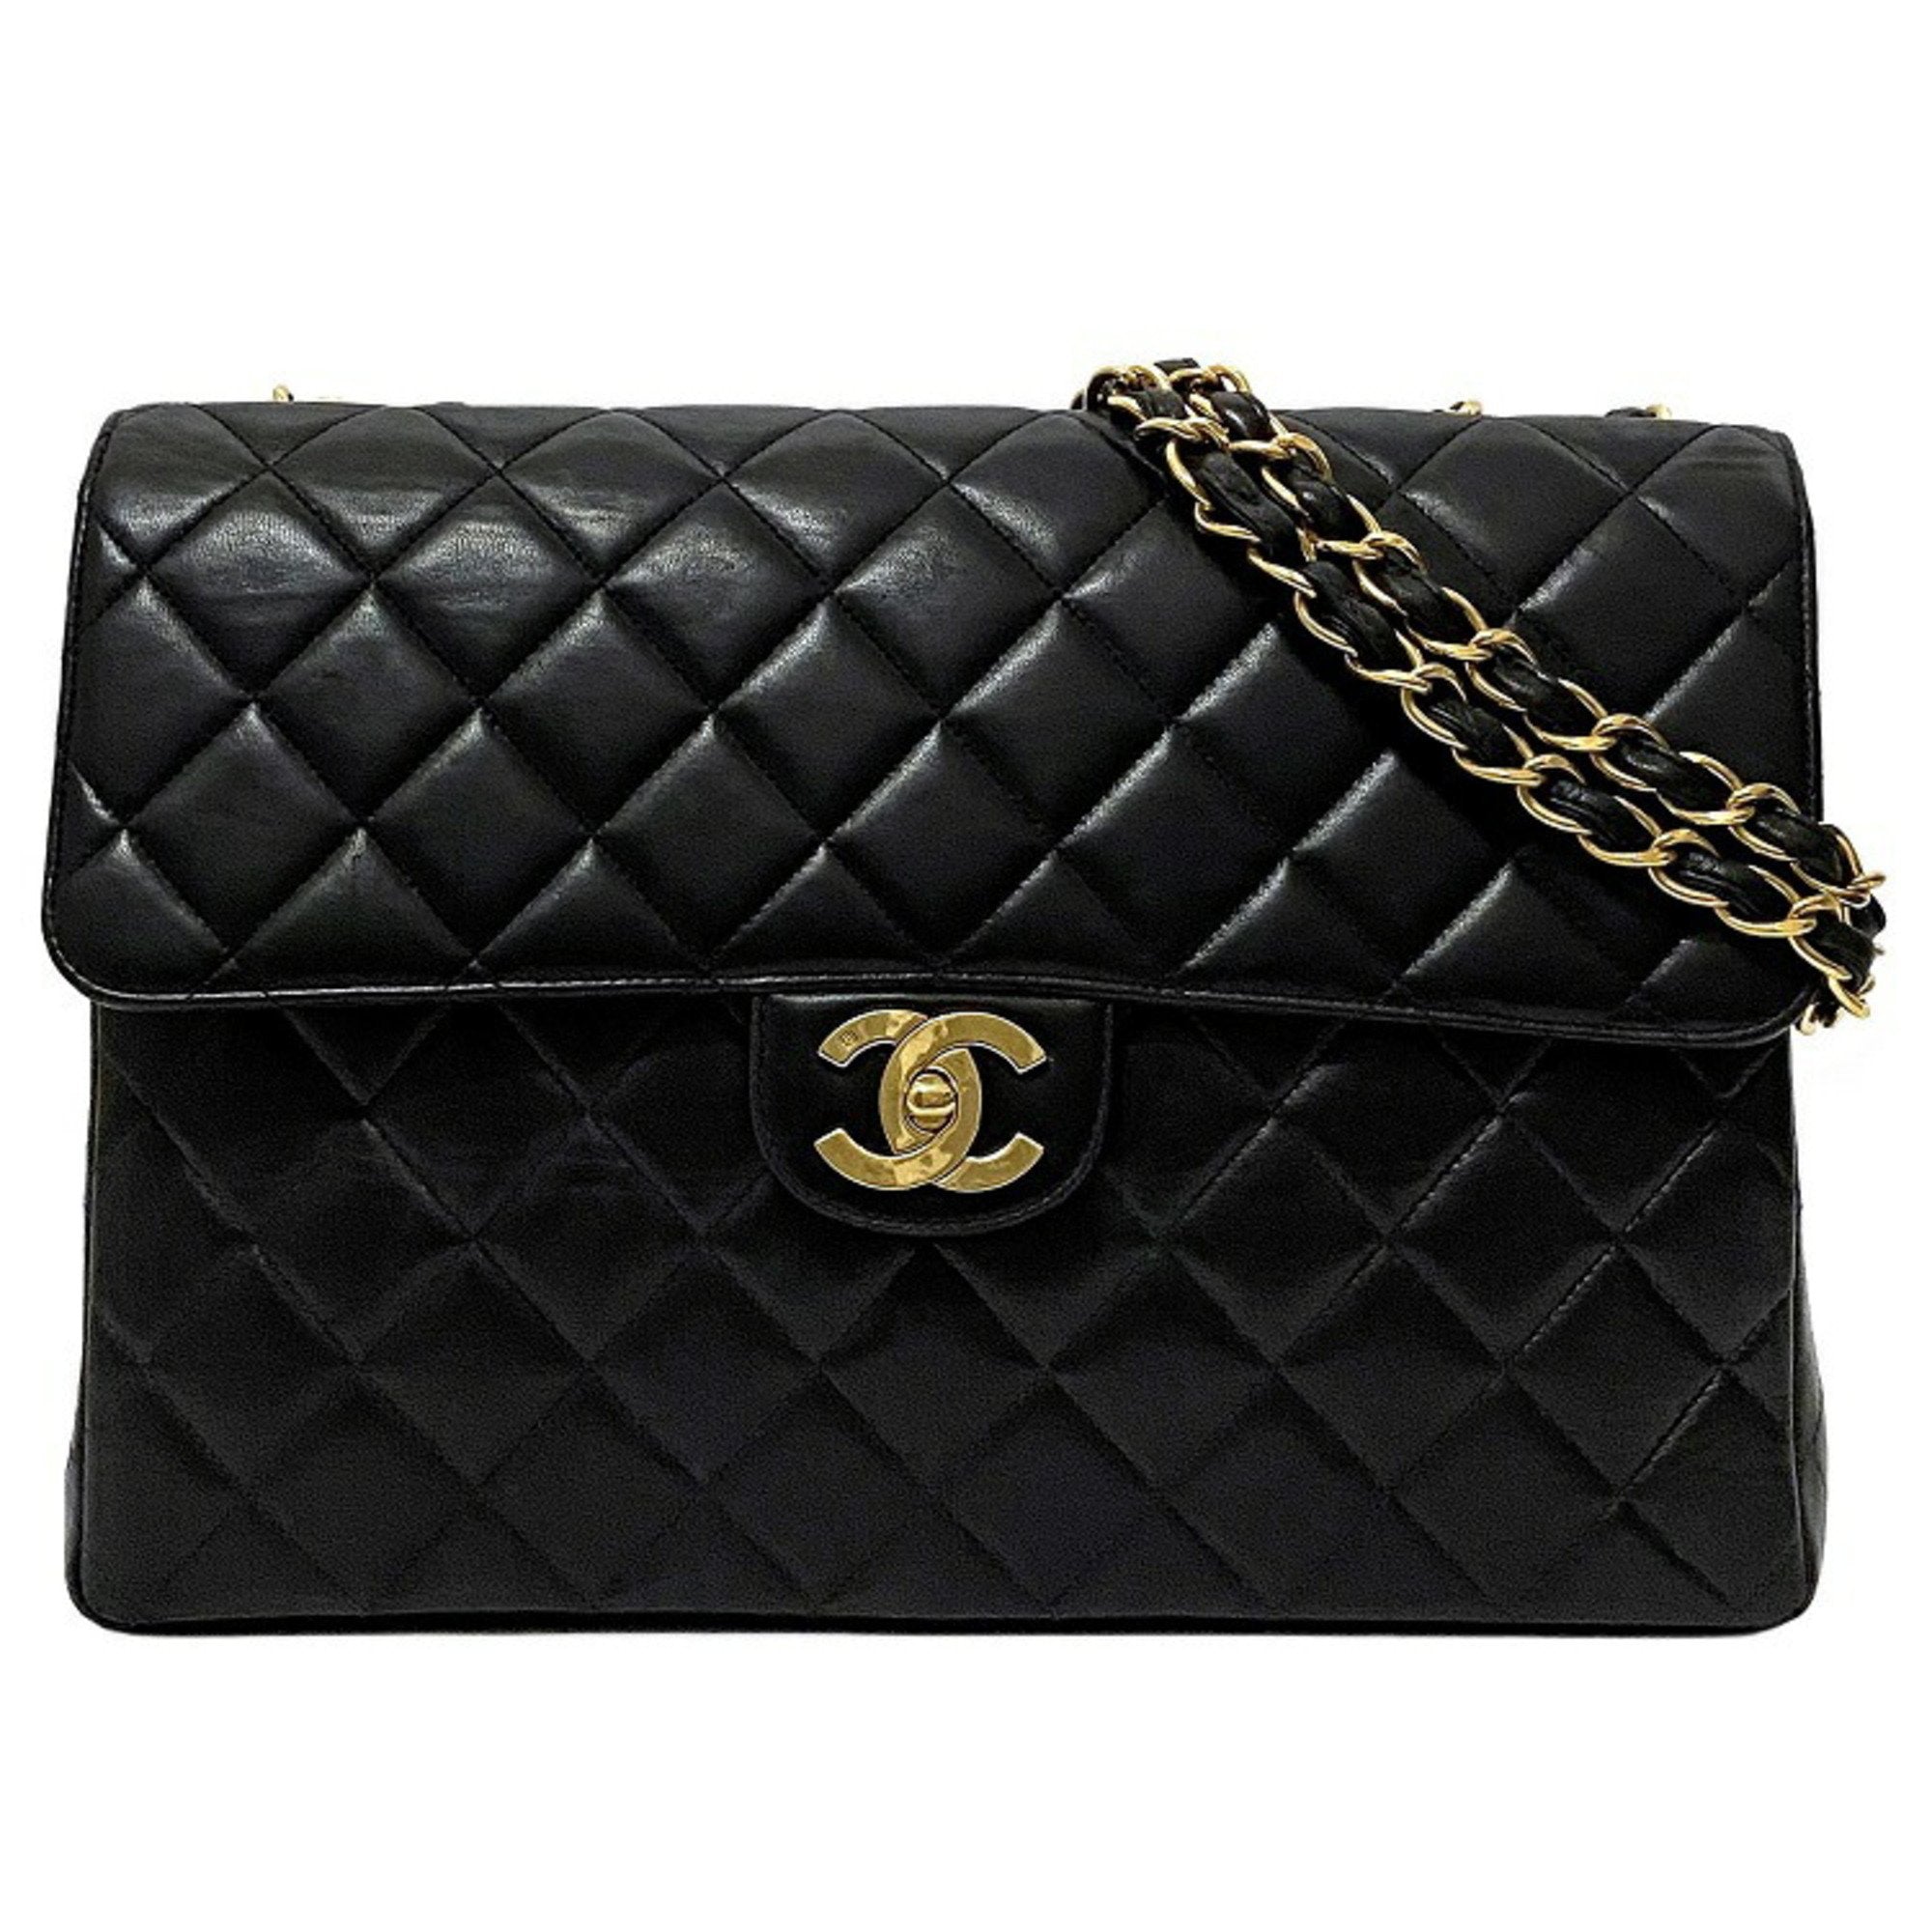 Chanel chain shoulder bag black gold matelasse leather lambskin No. 3